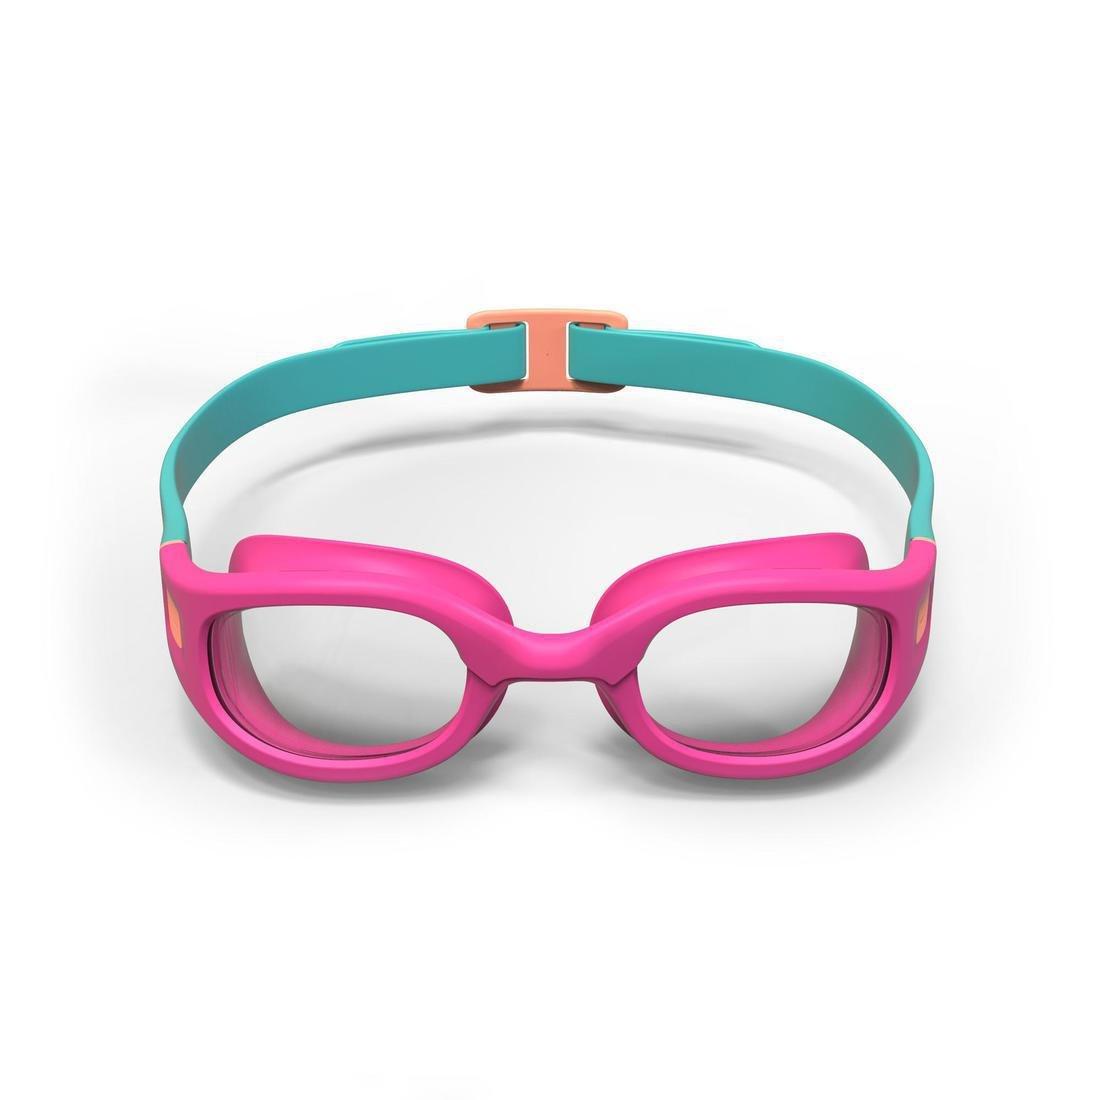 NABAIJI - Swimming Goggles Soft, Clear Lenses